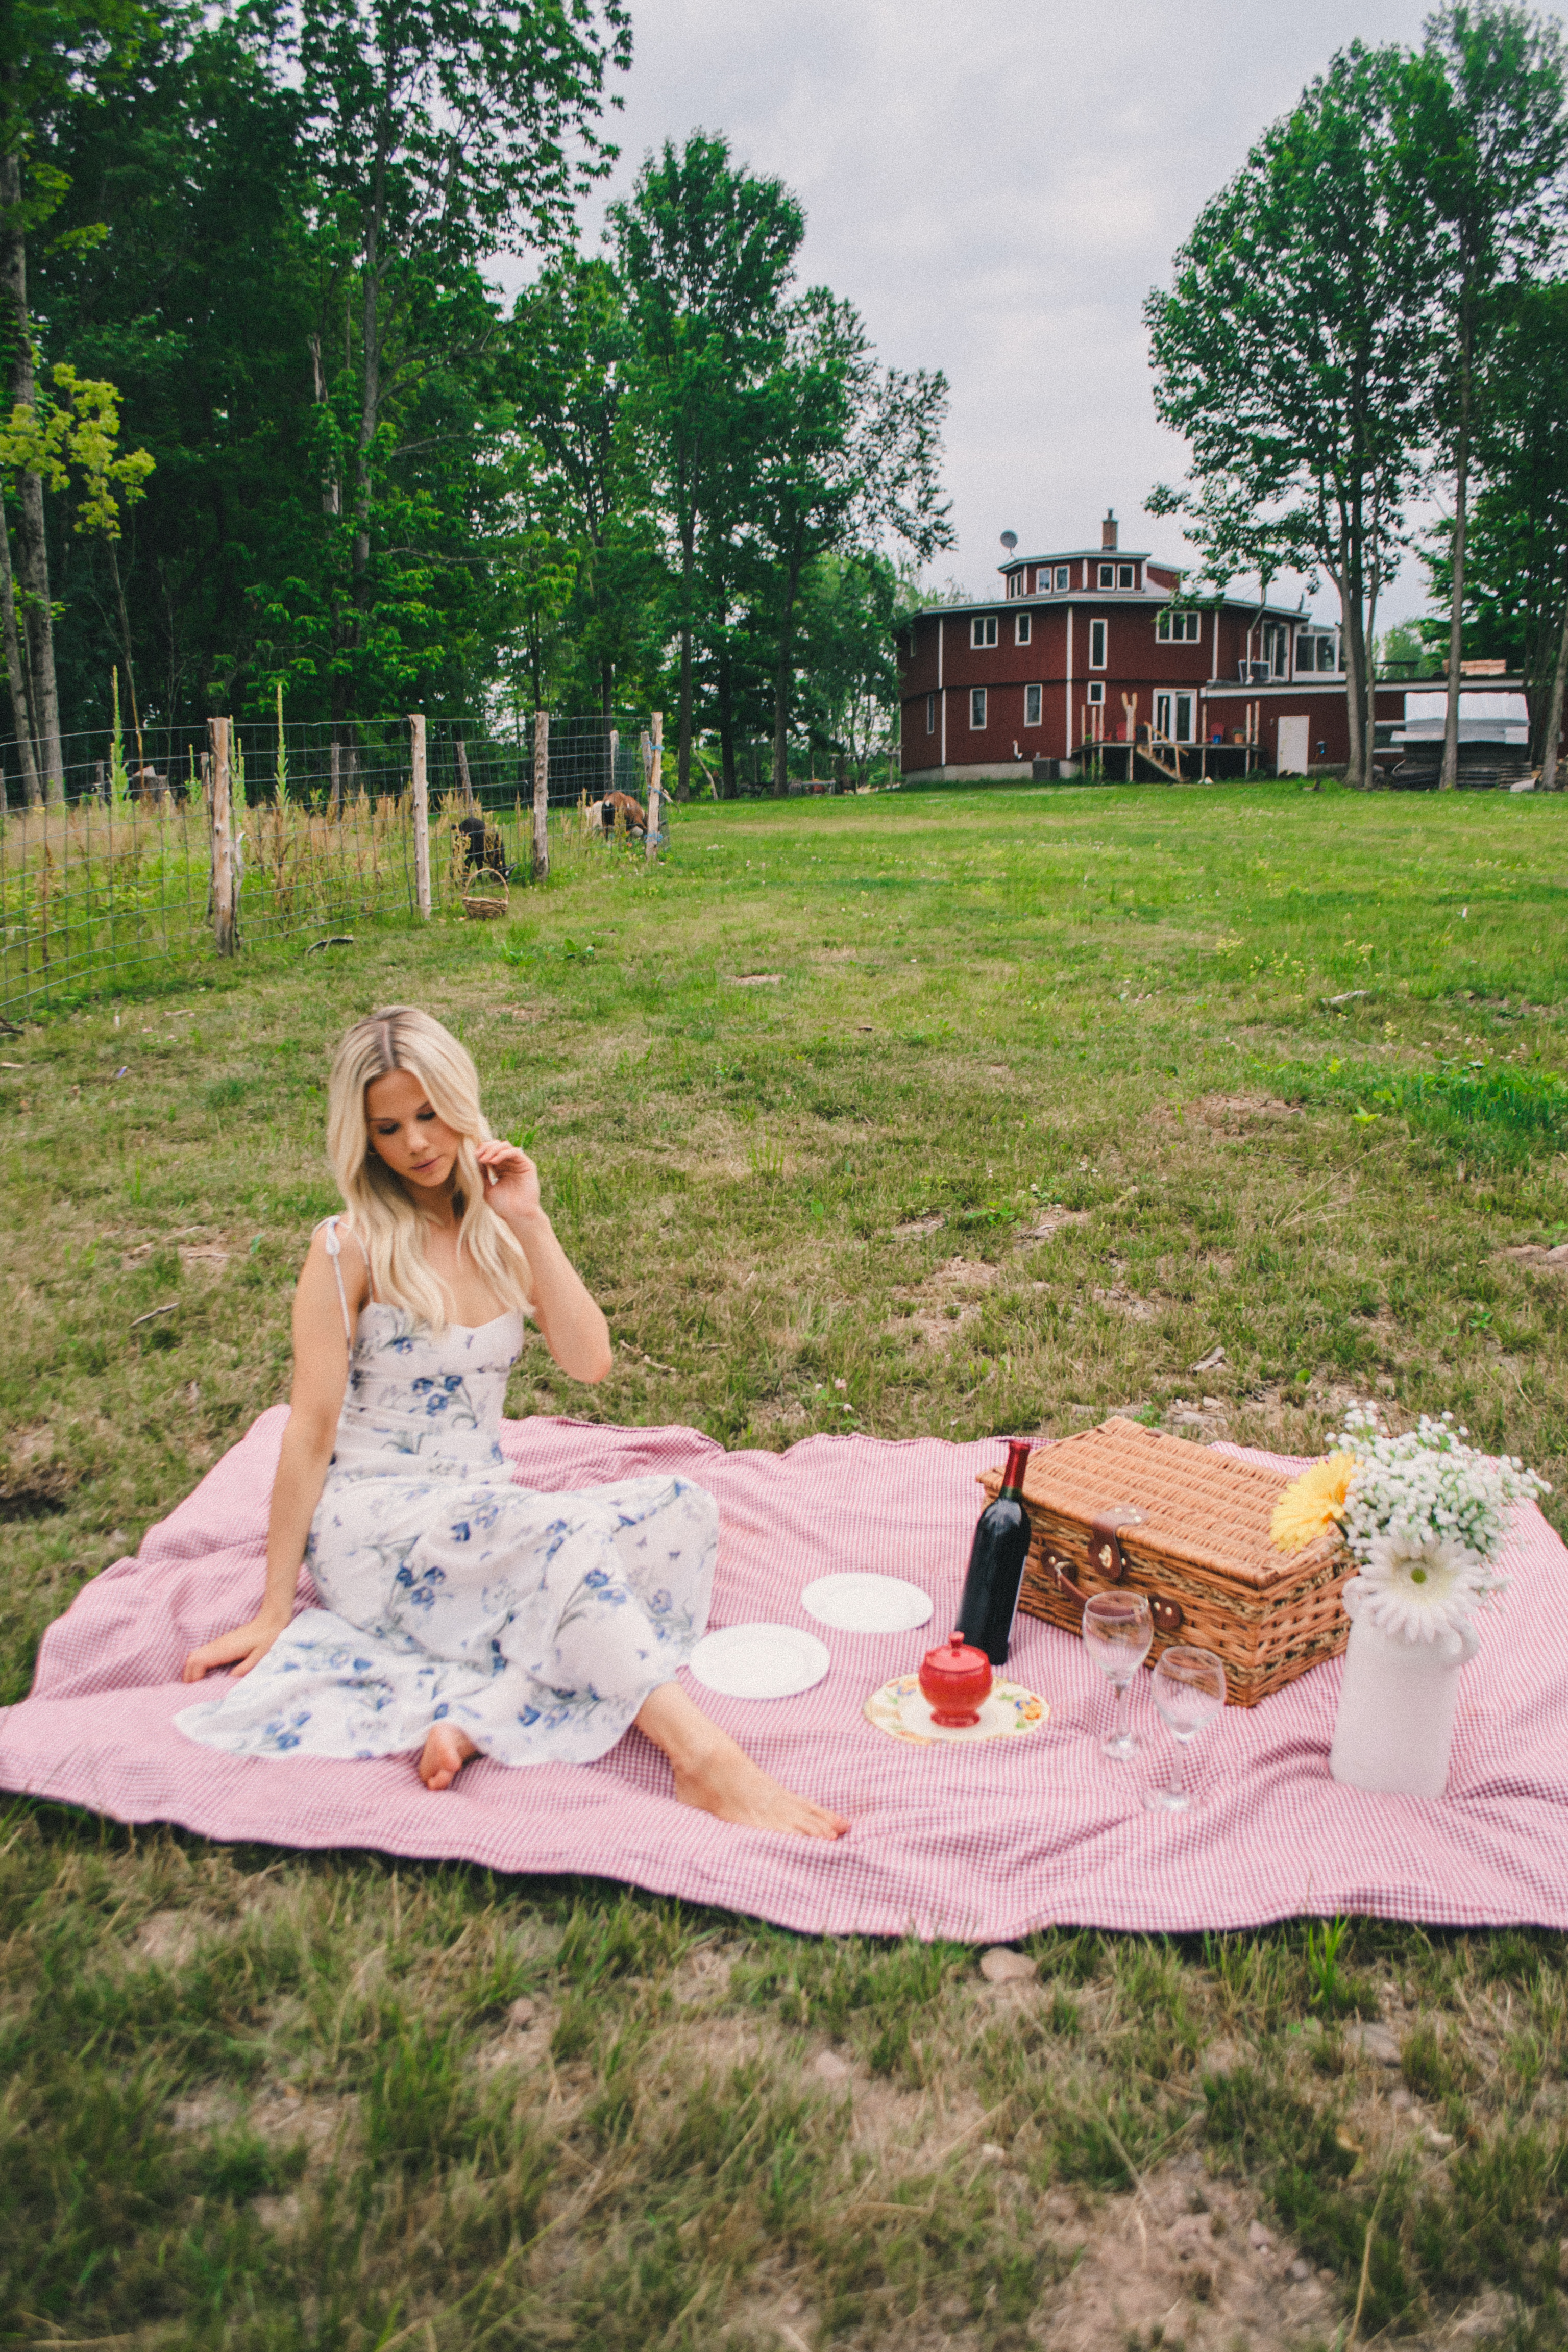 farm style, farm dress, floral dress, picnic, picnic style #farm #reformation #picnic